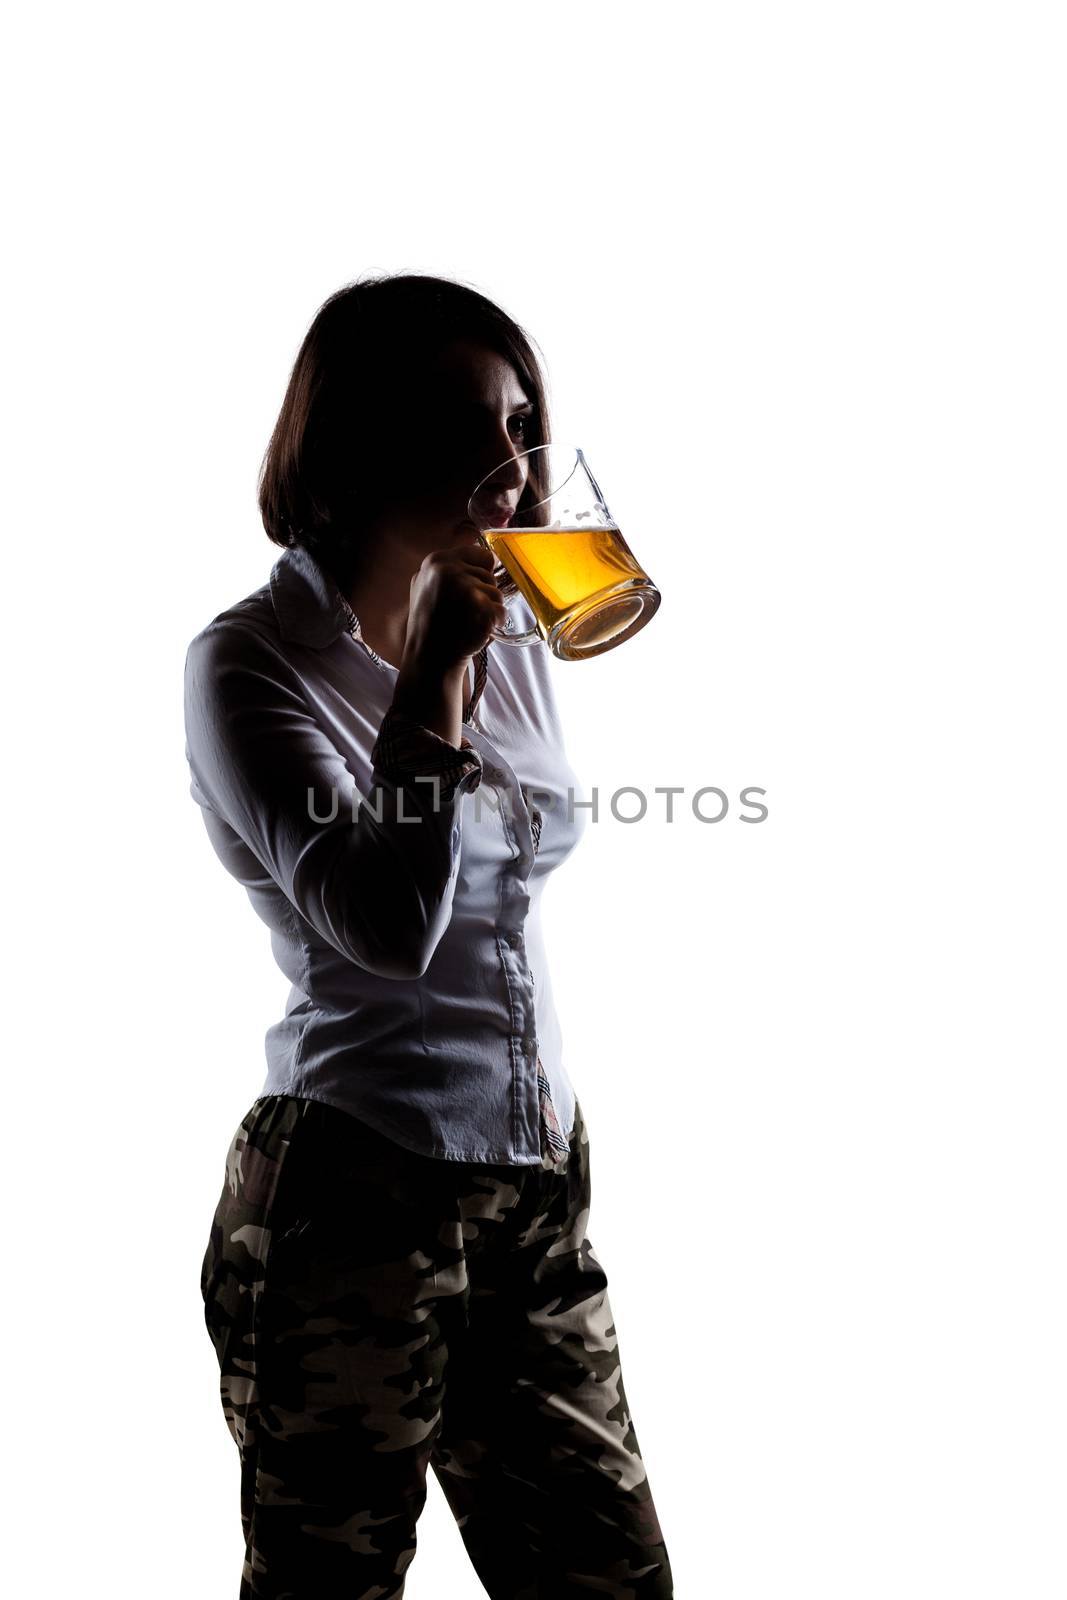 girl drinking beer by kokimk